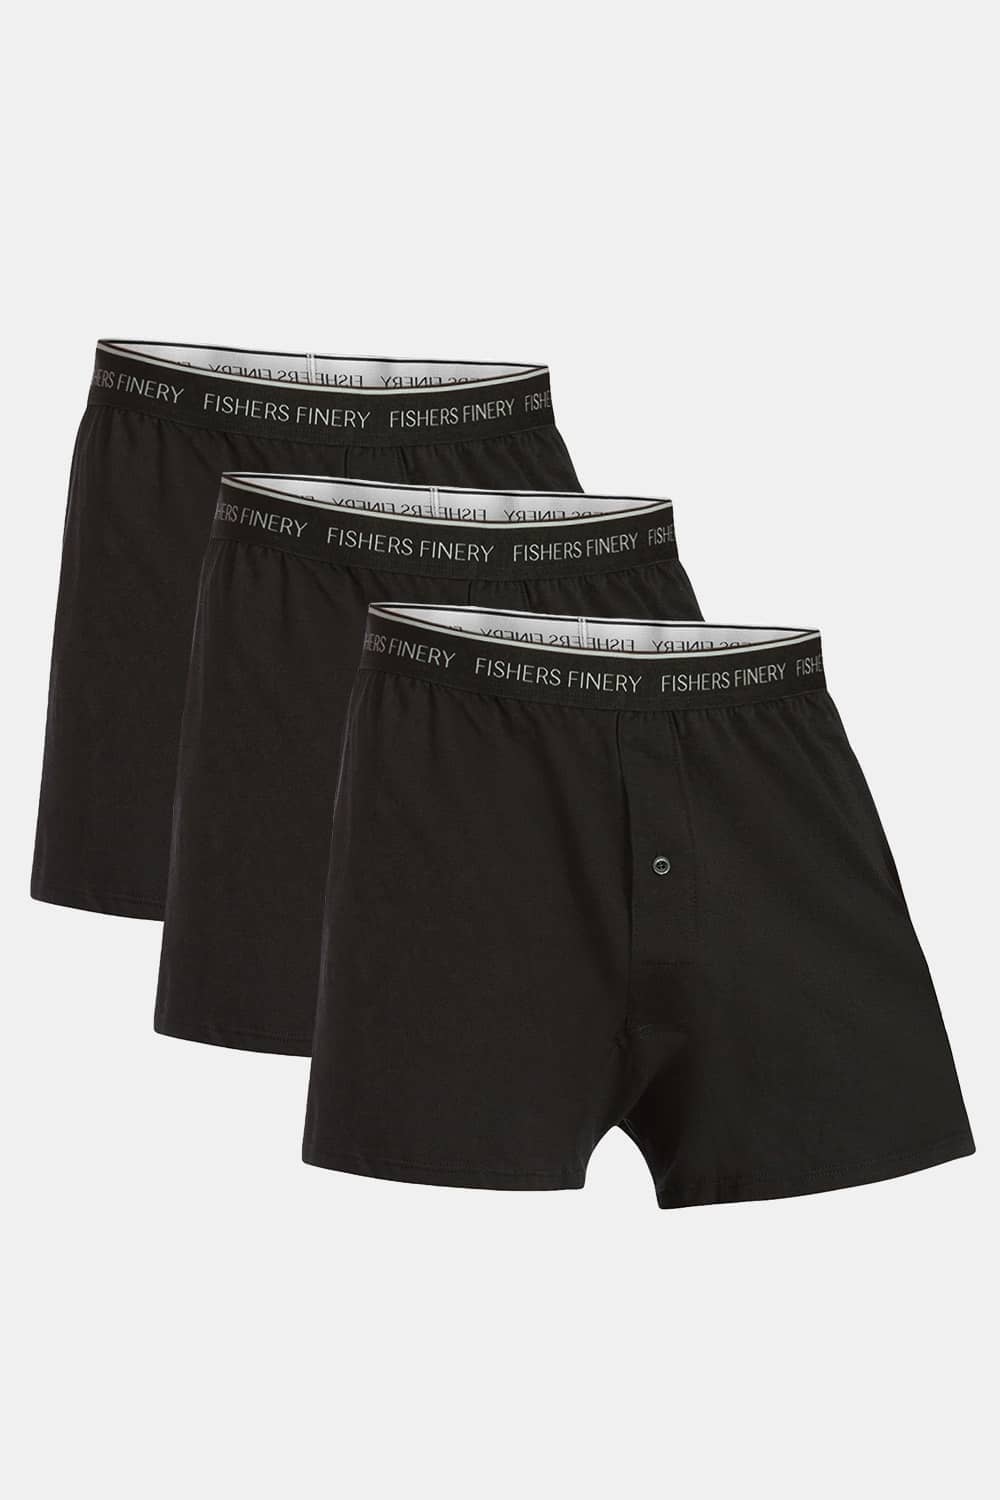 Men Knit Pure Silk 100% Boxer Brief Underpants Trunks Shorts Underwear  Stretch